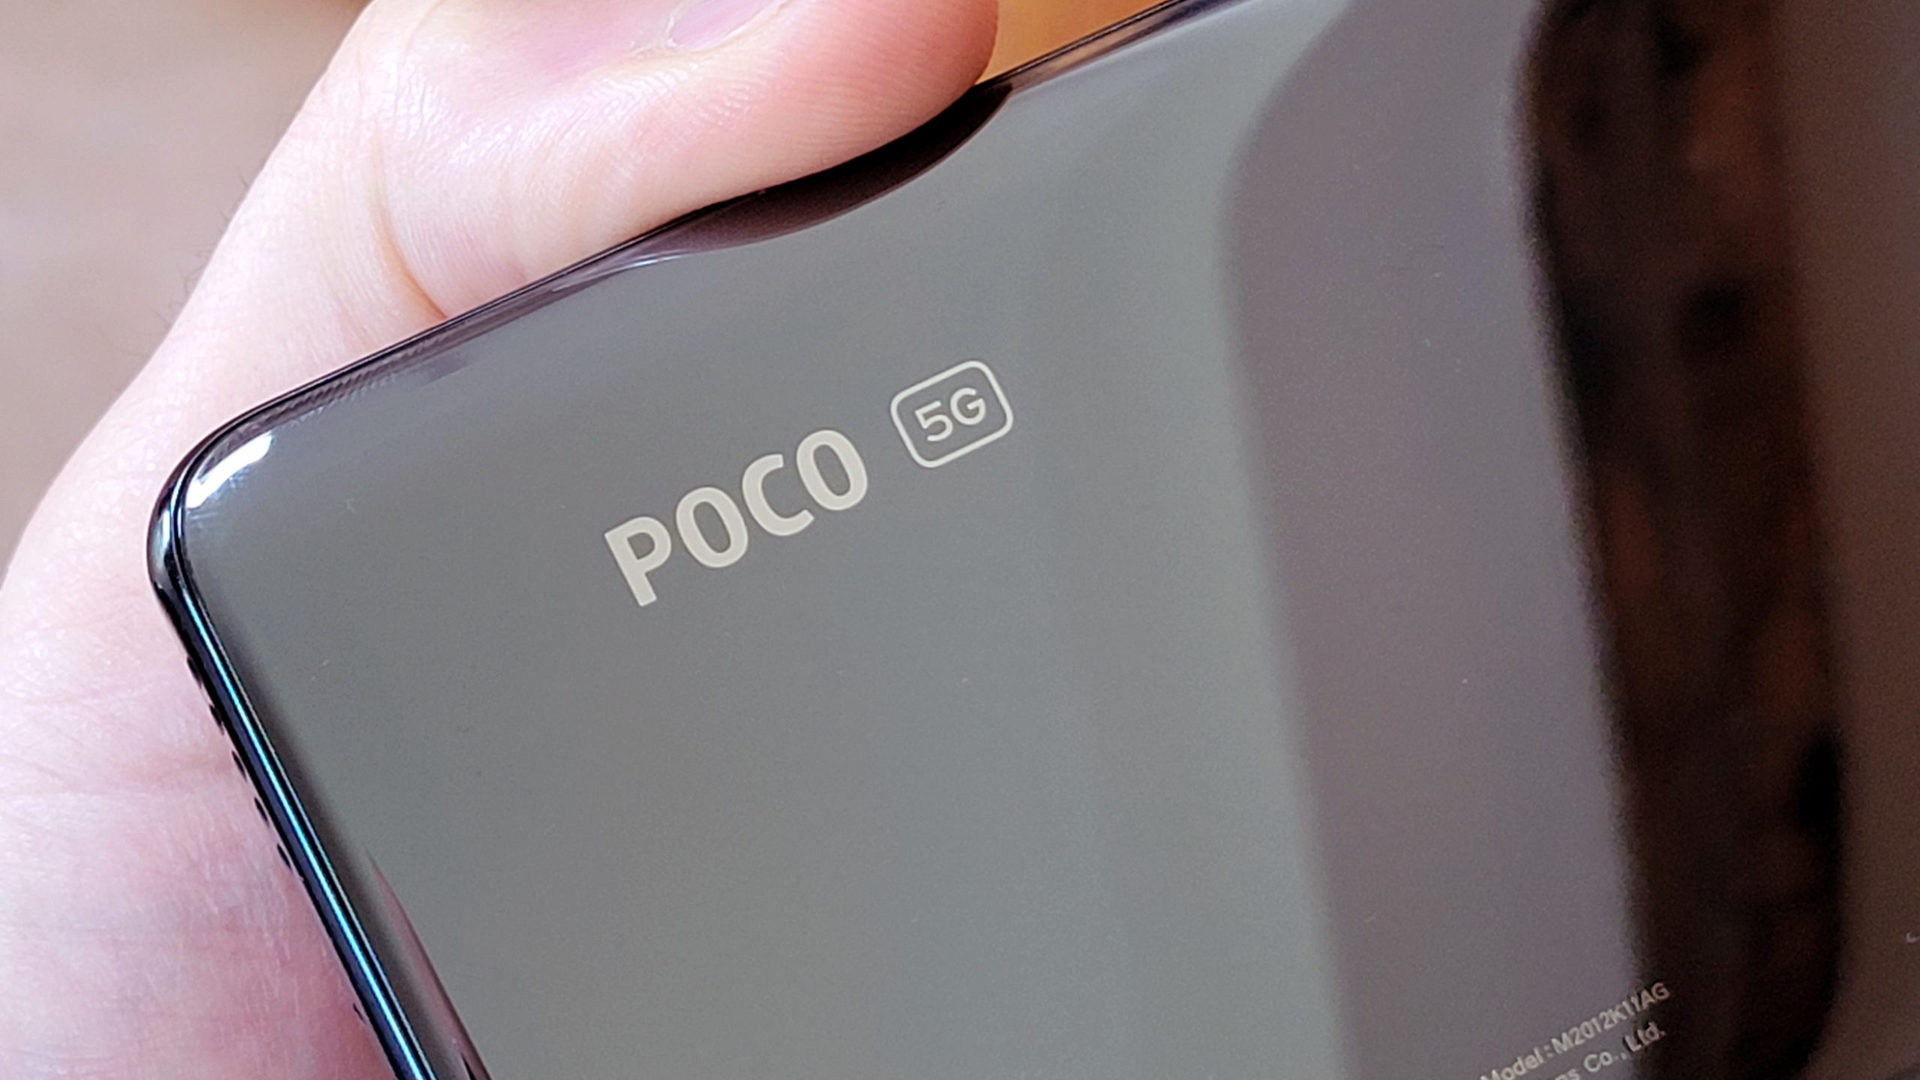 POCO F3 (Xiaomi Mi 11X) review: This is the real successor to POCO F1